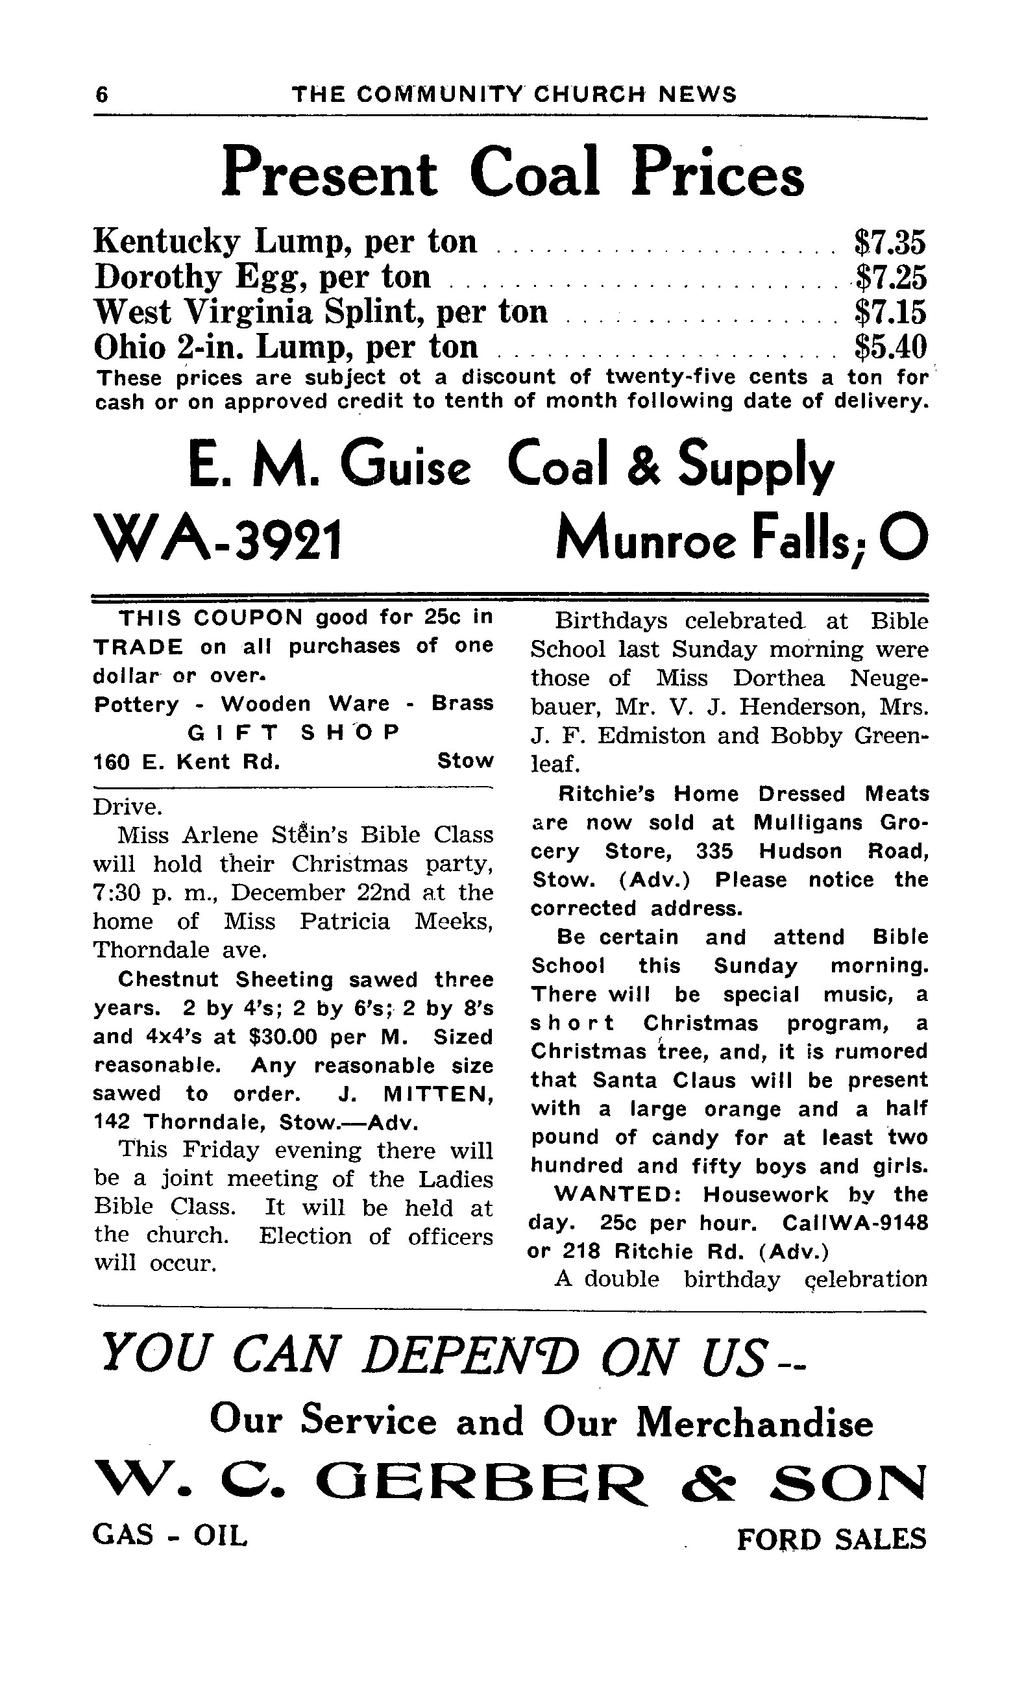 THE COMMUNITY CHURCH 6 NEWS Present Coal Prices Kentucky Lump, per ton Dorothy Egg, per ton West Virginia Splint, per ton Ohio 2-in. Lump, per ton $7.35 $7.25 $7.15 $5.